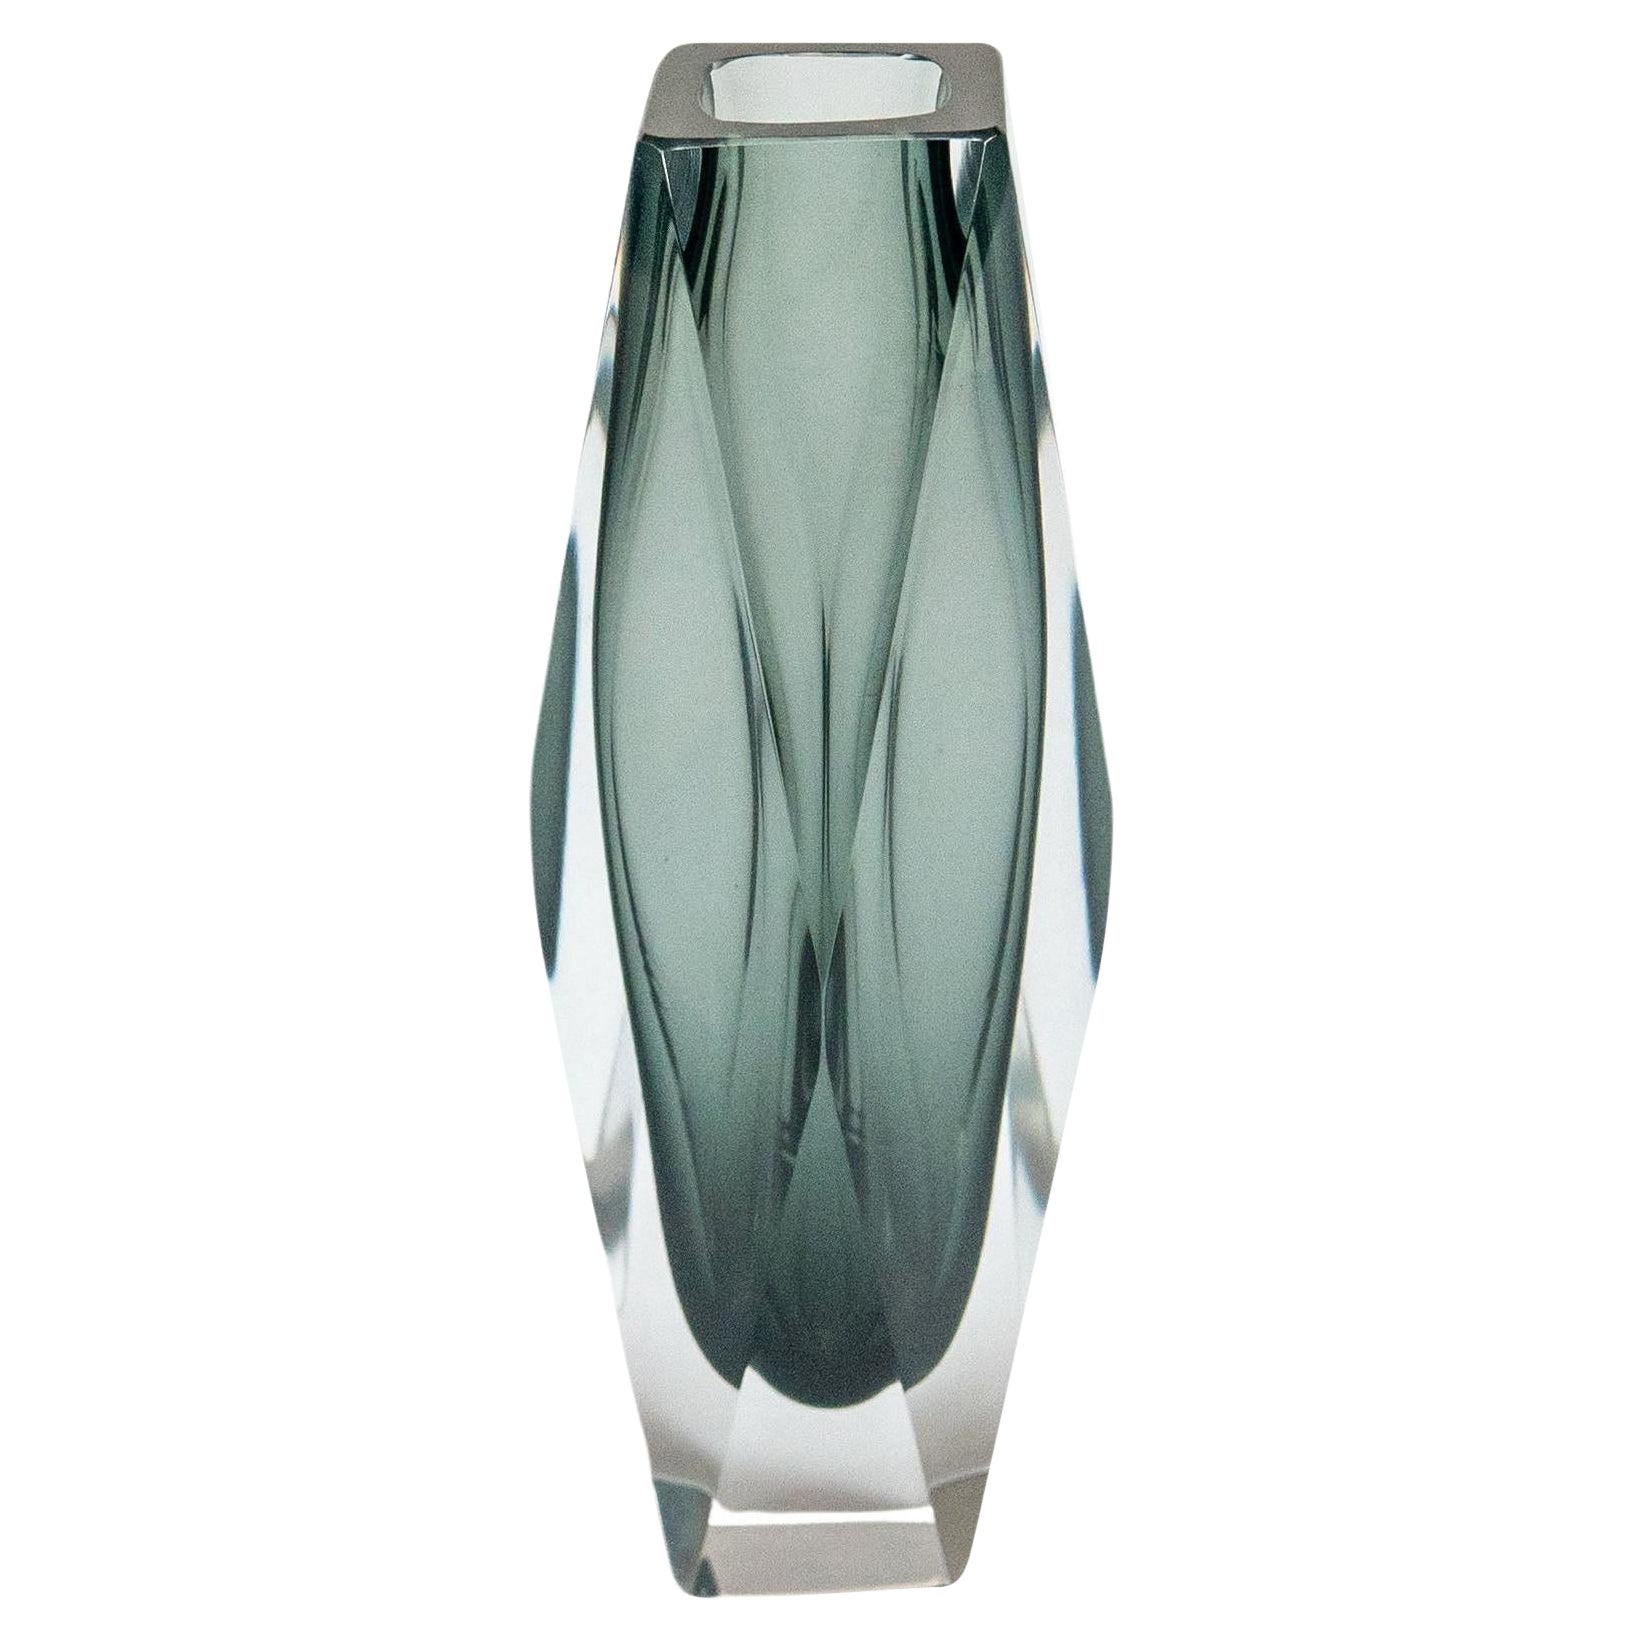 Vintage Geometric Vase in Grey "Sommerso" Murano Glass, Flavio Poli Style